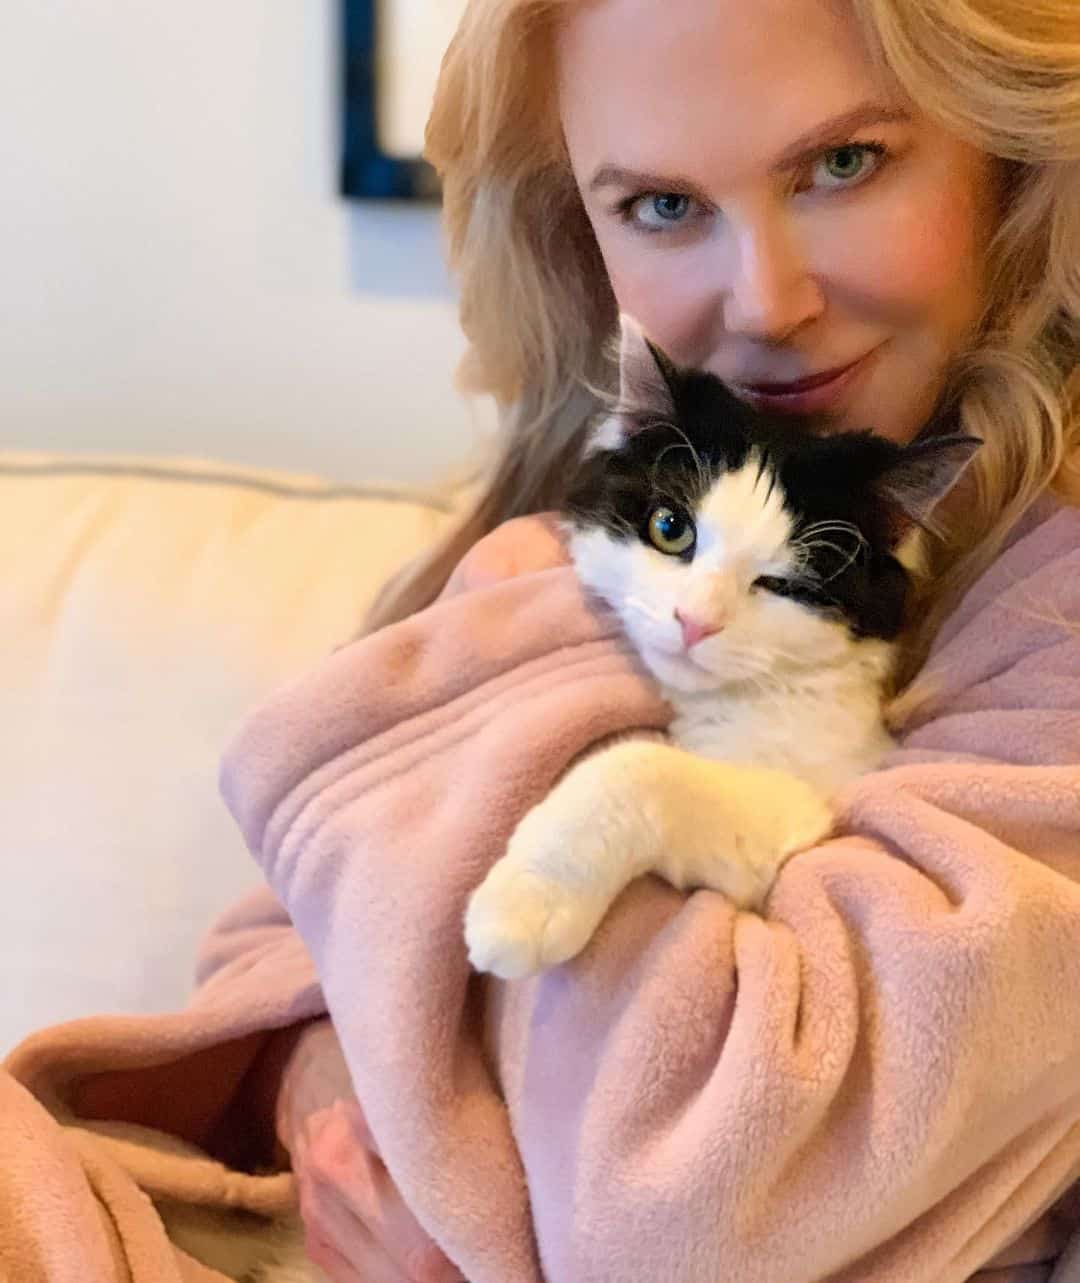 nicole kidman holding her black and white cat